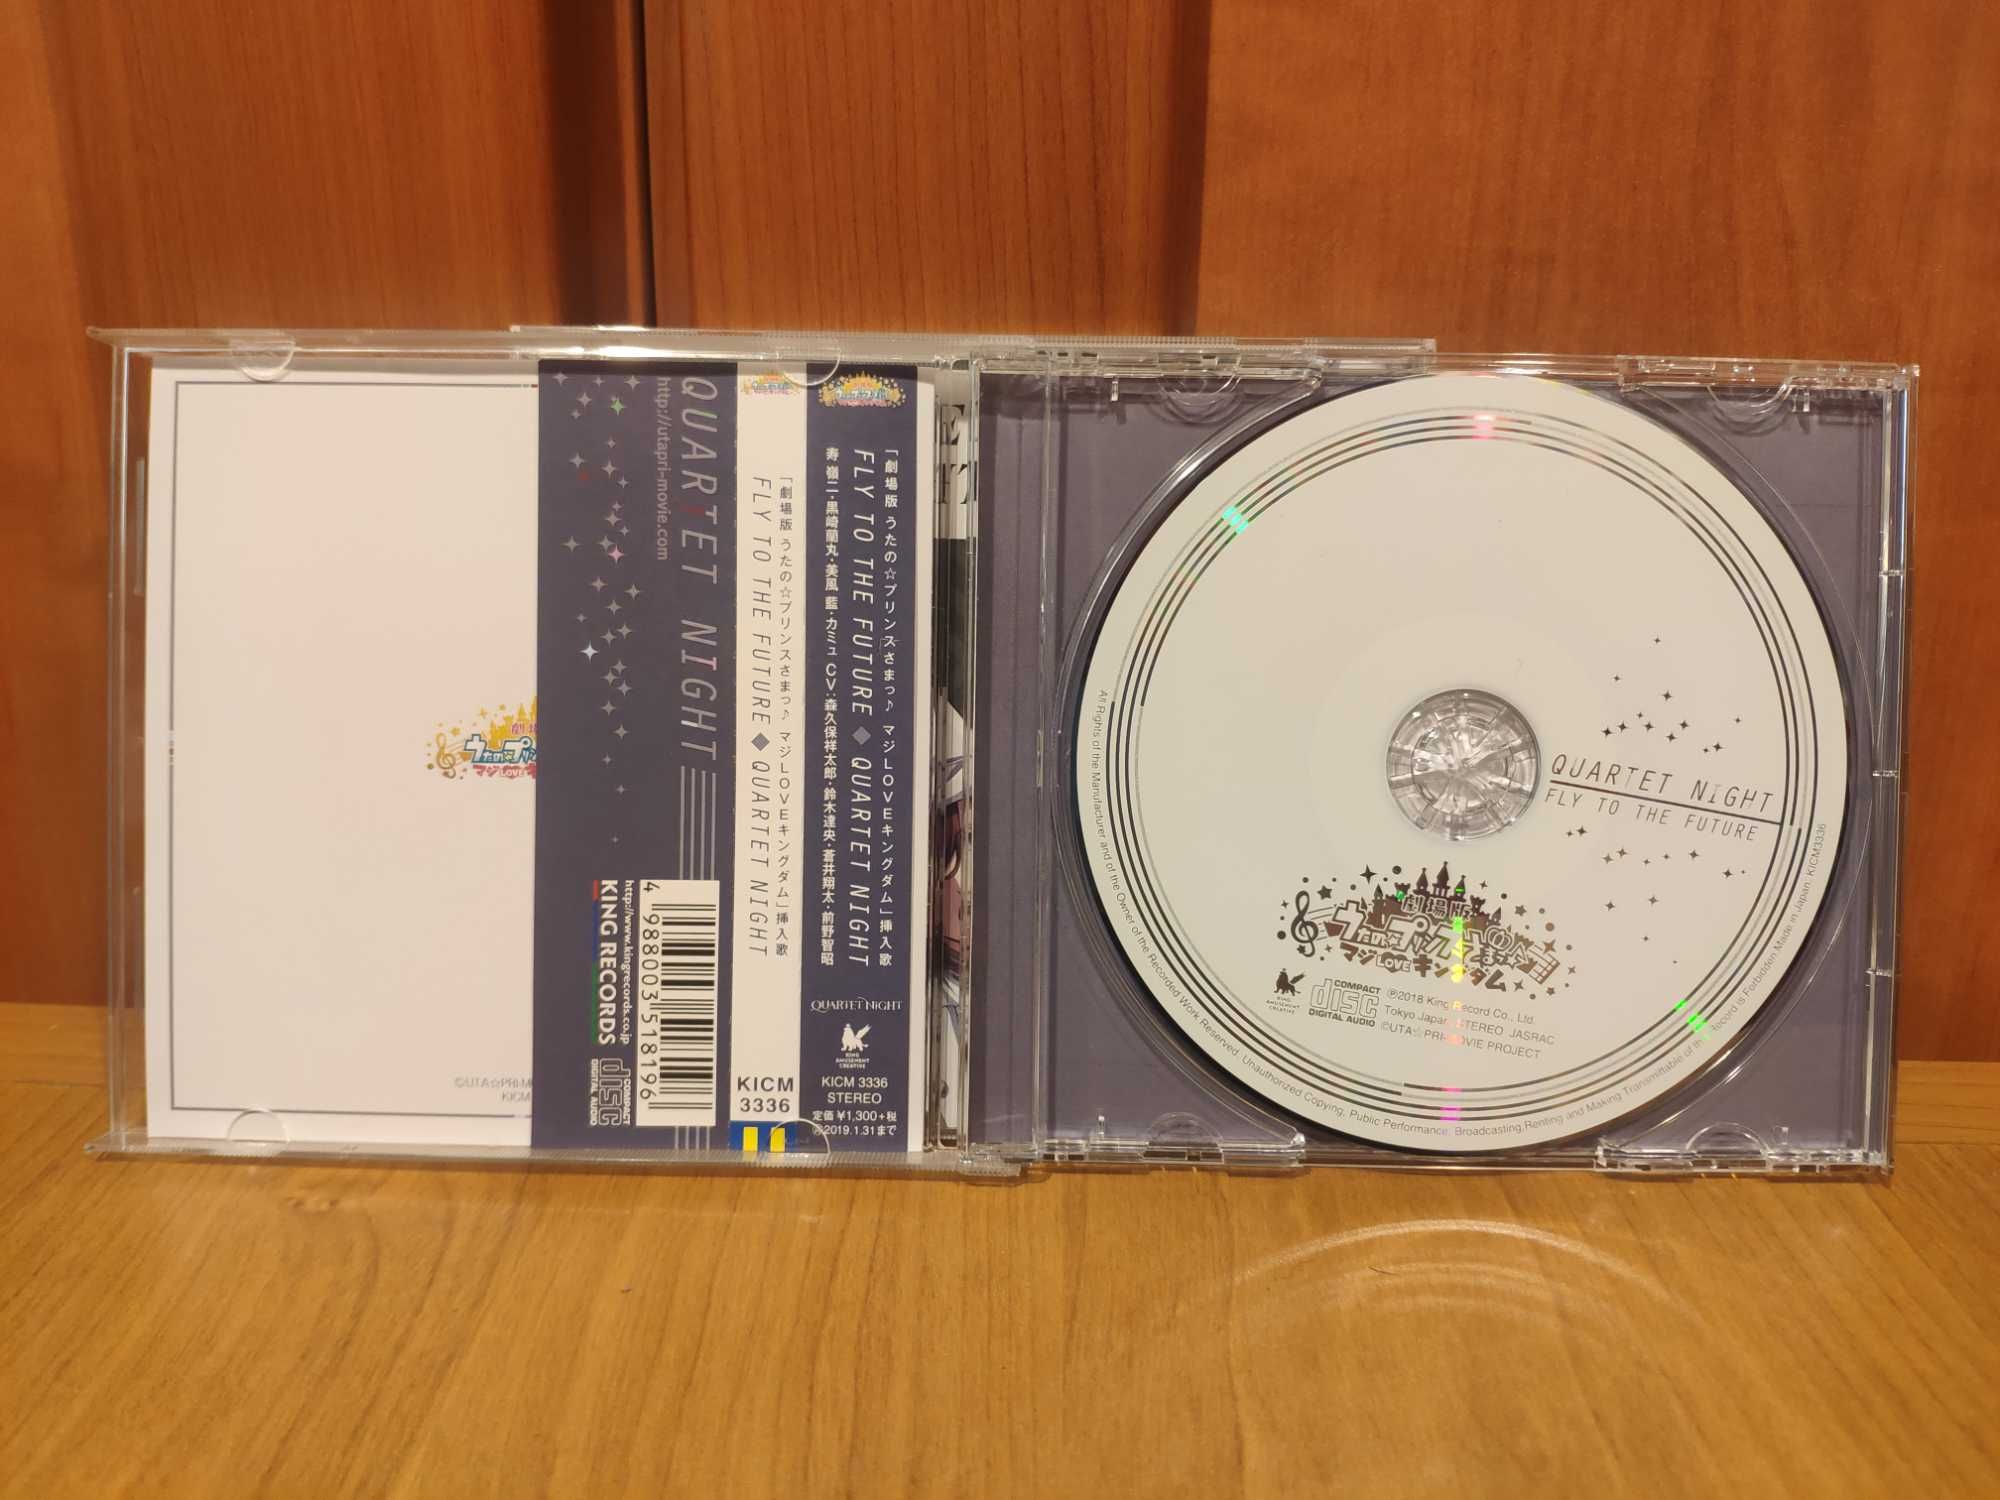 Single Anime Manga Uta no Prince Sama - Quartet Night 2x CD